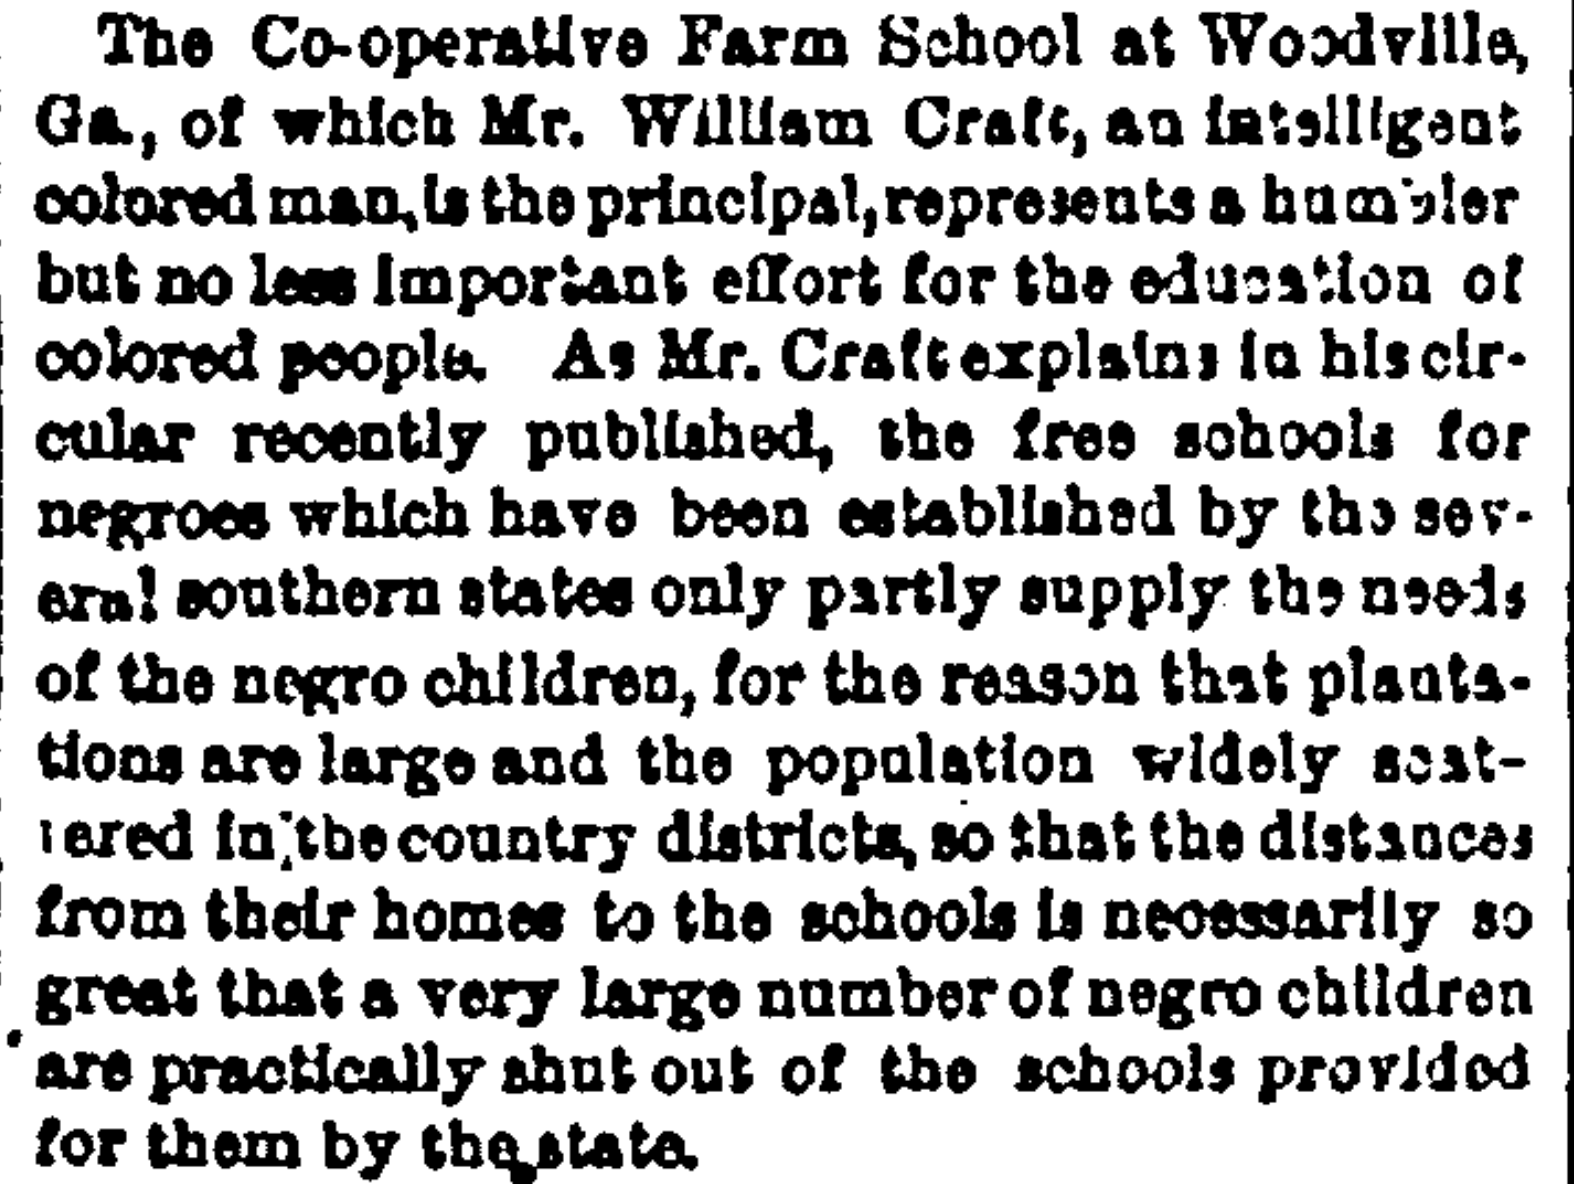 Newspaper clip about Woodville Co-operative Farm School.